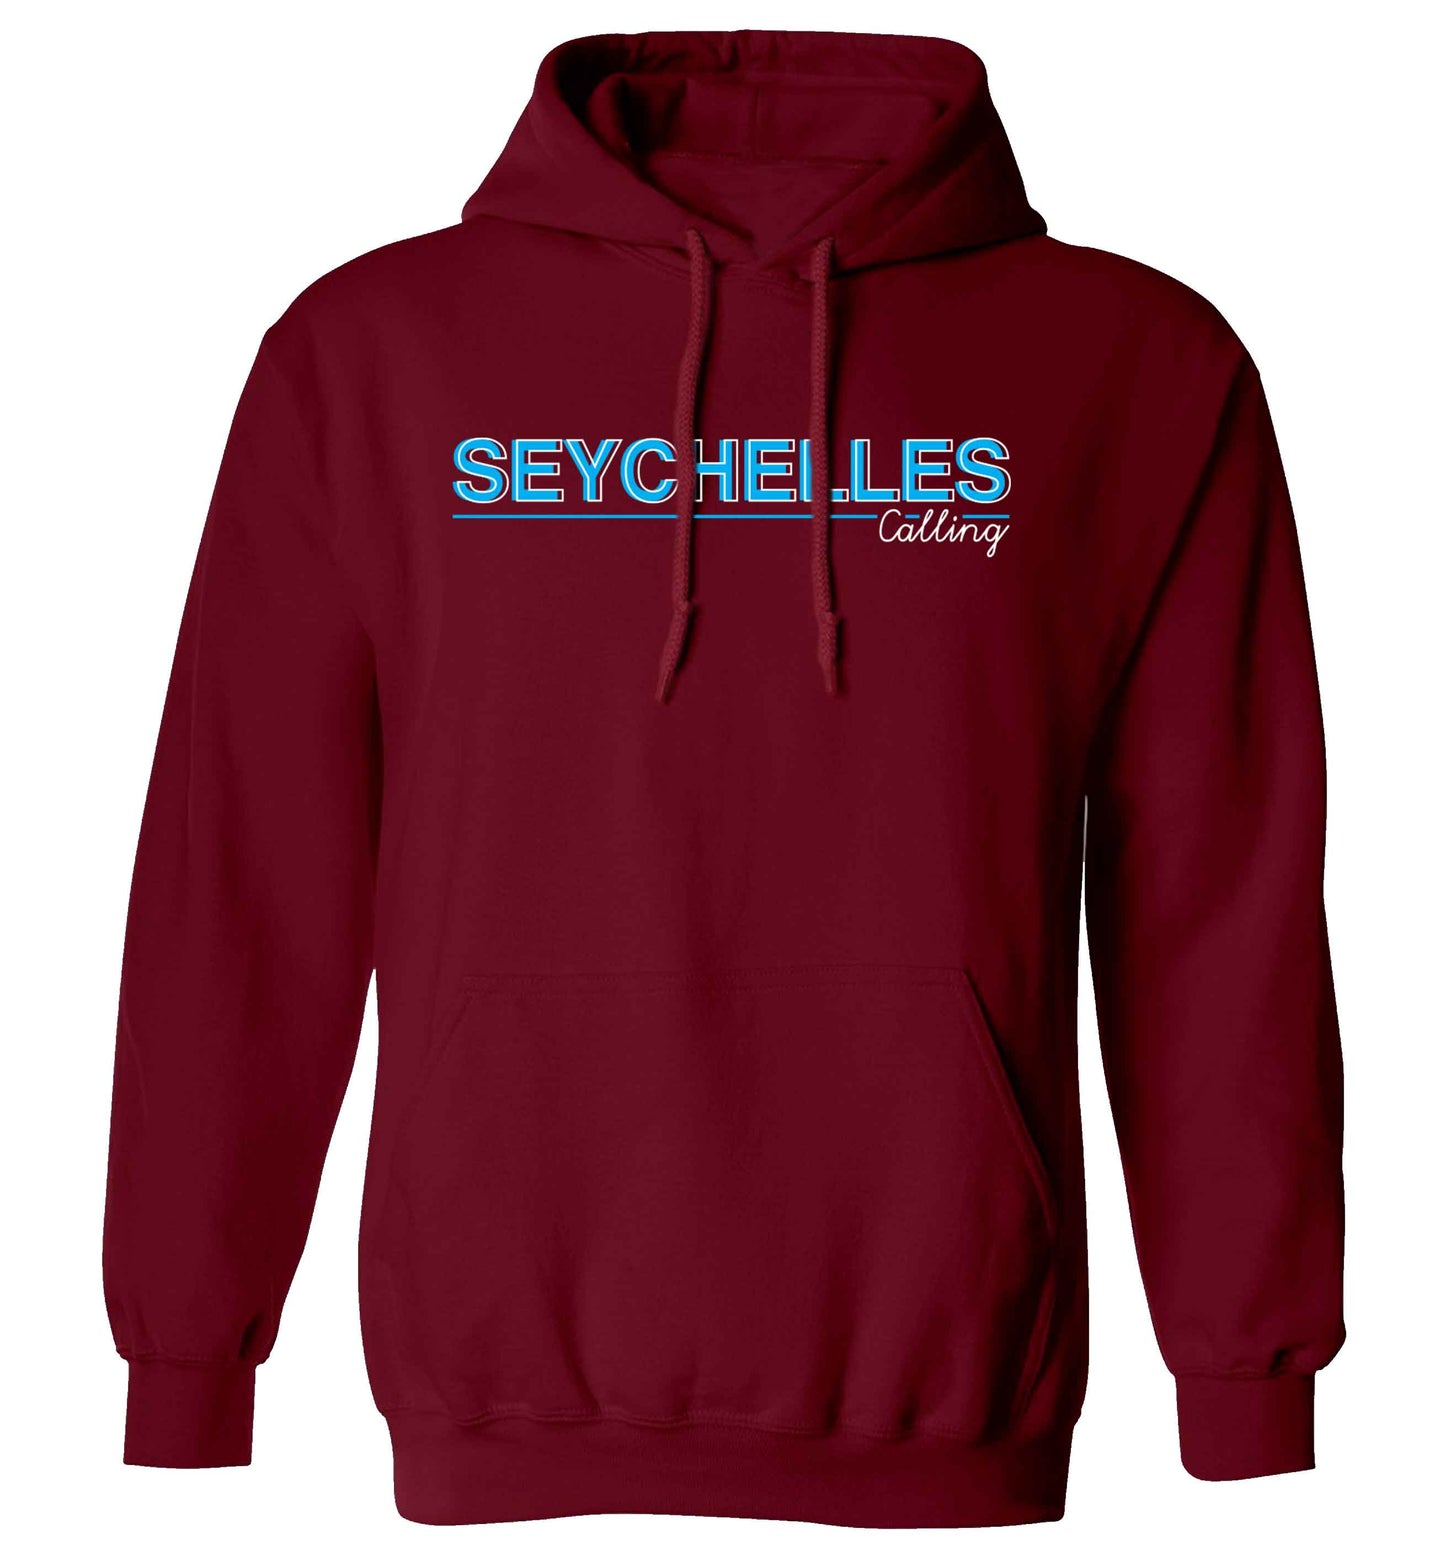 Seychelles calling adults unisex maroon hoodie 2XL